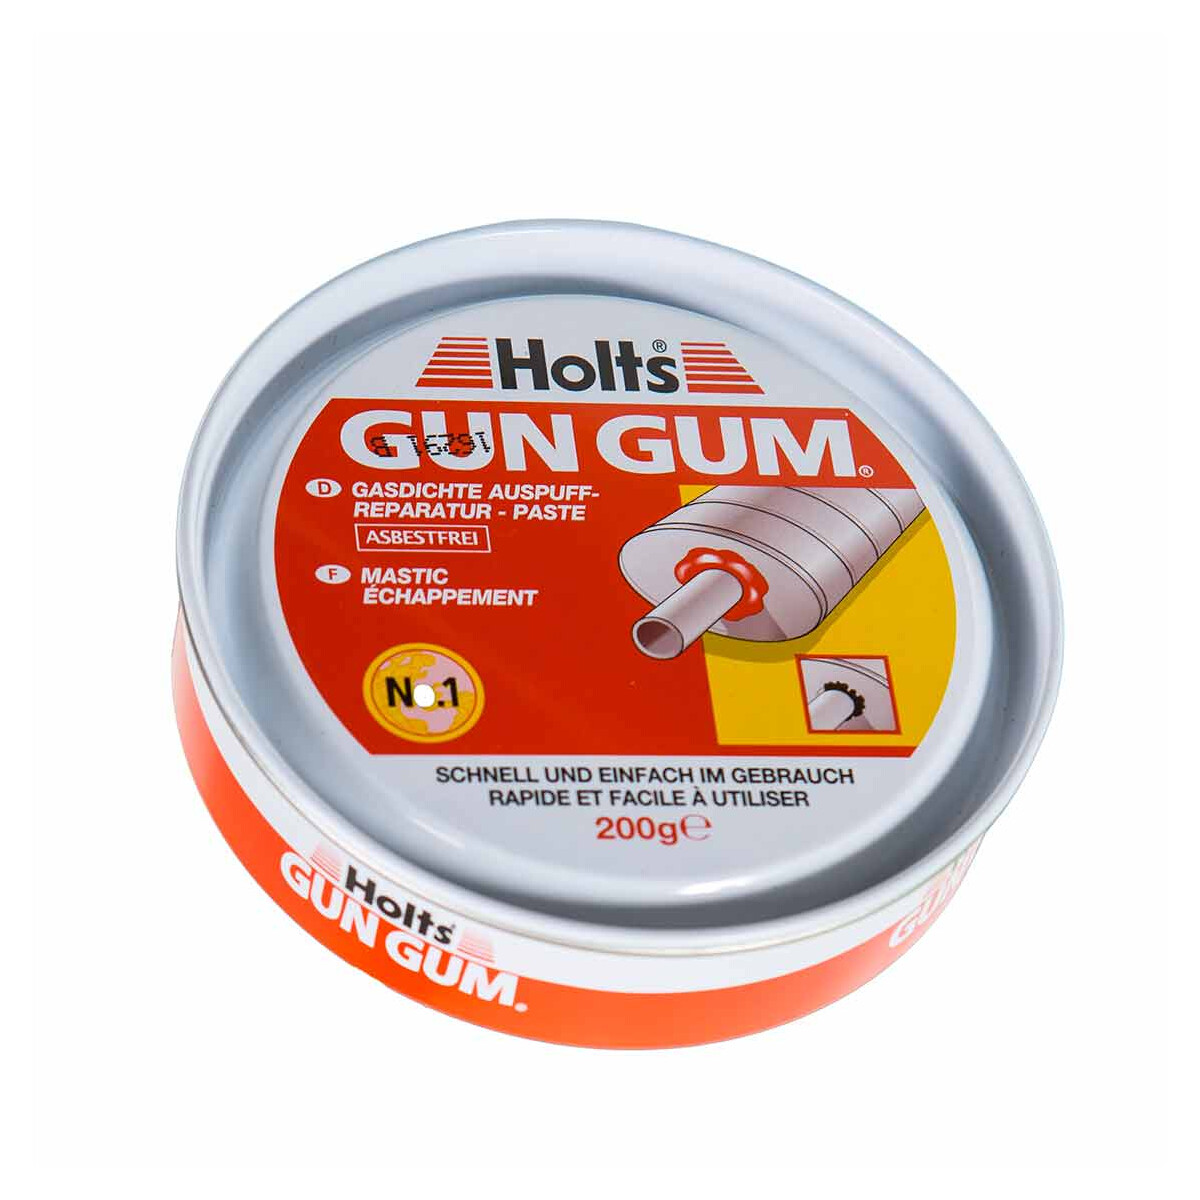 Original Holts Gun Gum Auspuffdichtmasse 200g - , 7,10 €